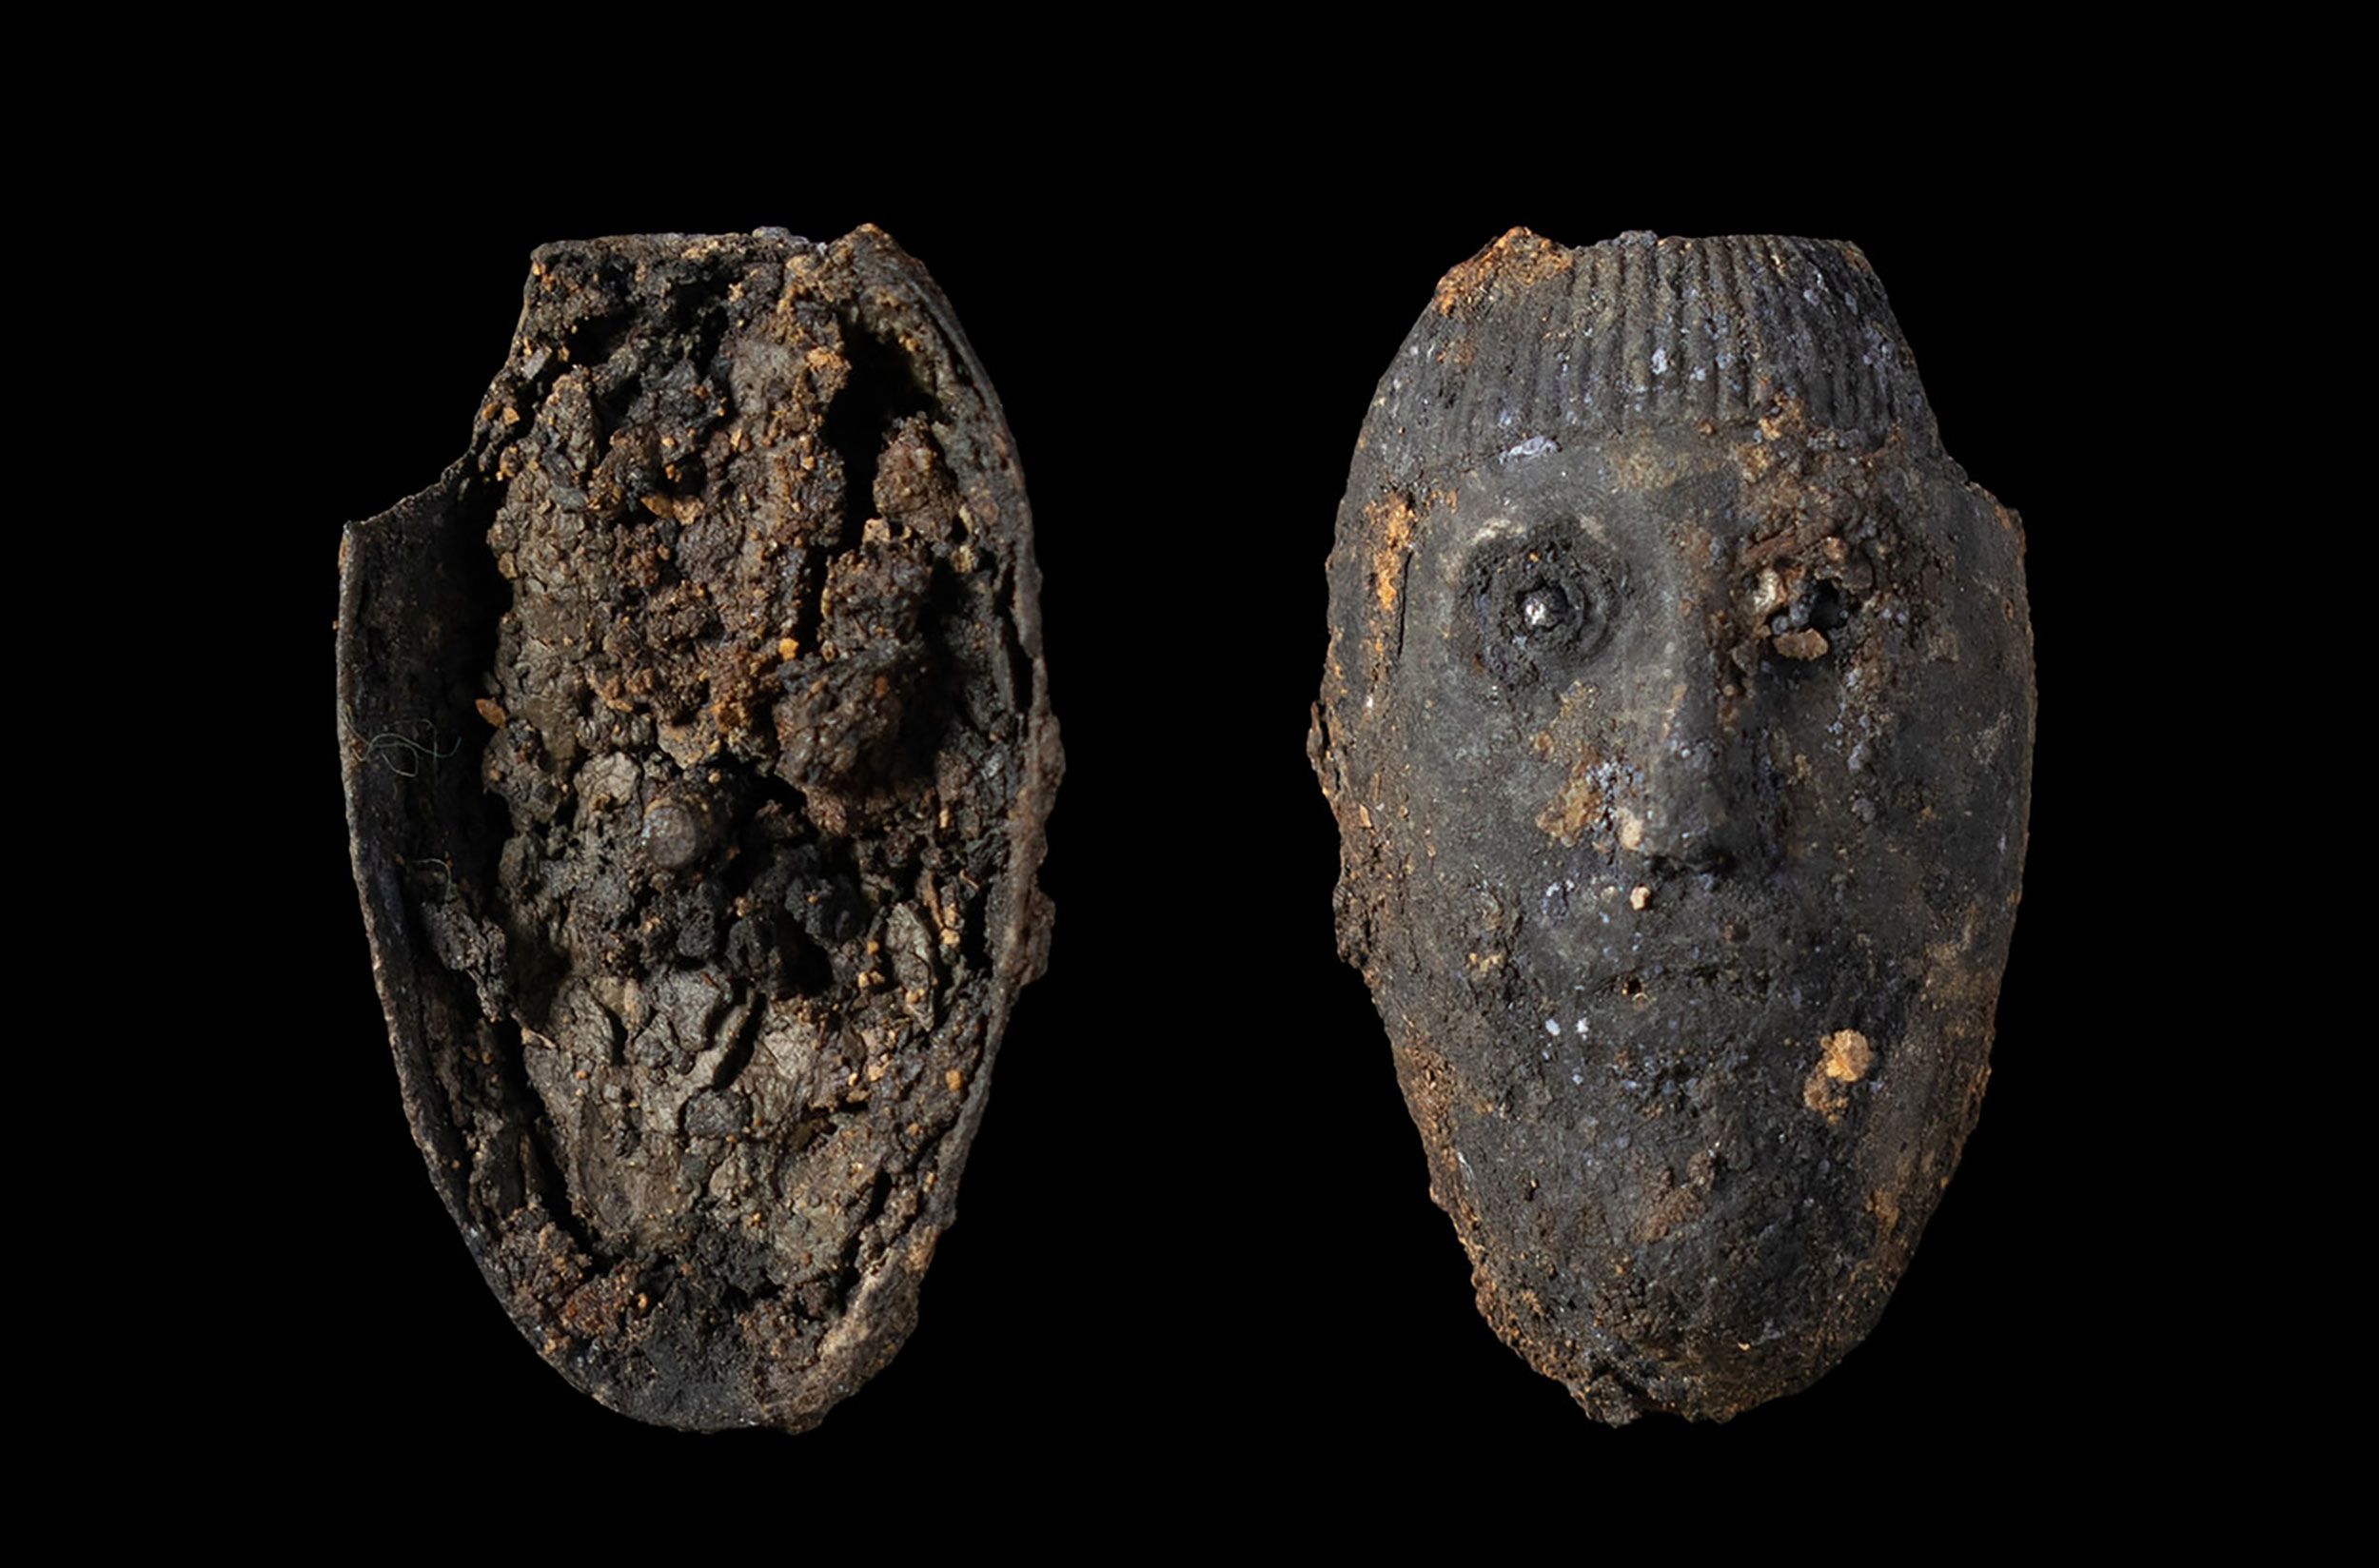 Medieval necklace 'Harpole Treasure' found at Northampton burial site - The  Washington Post